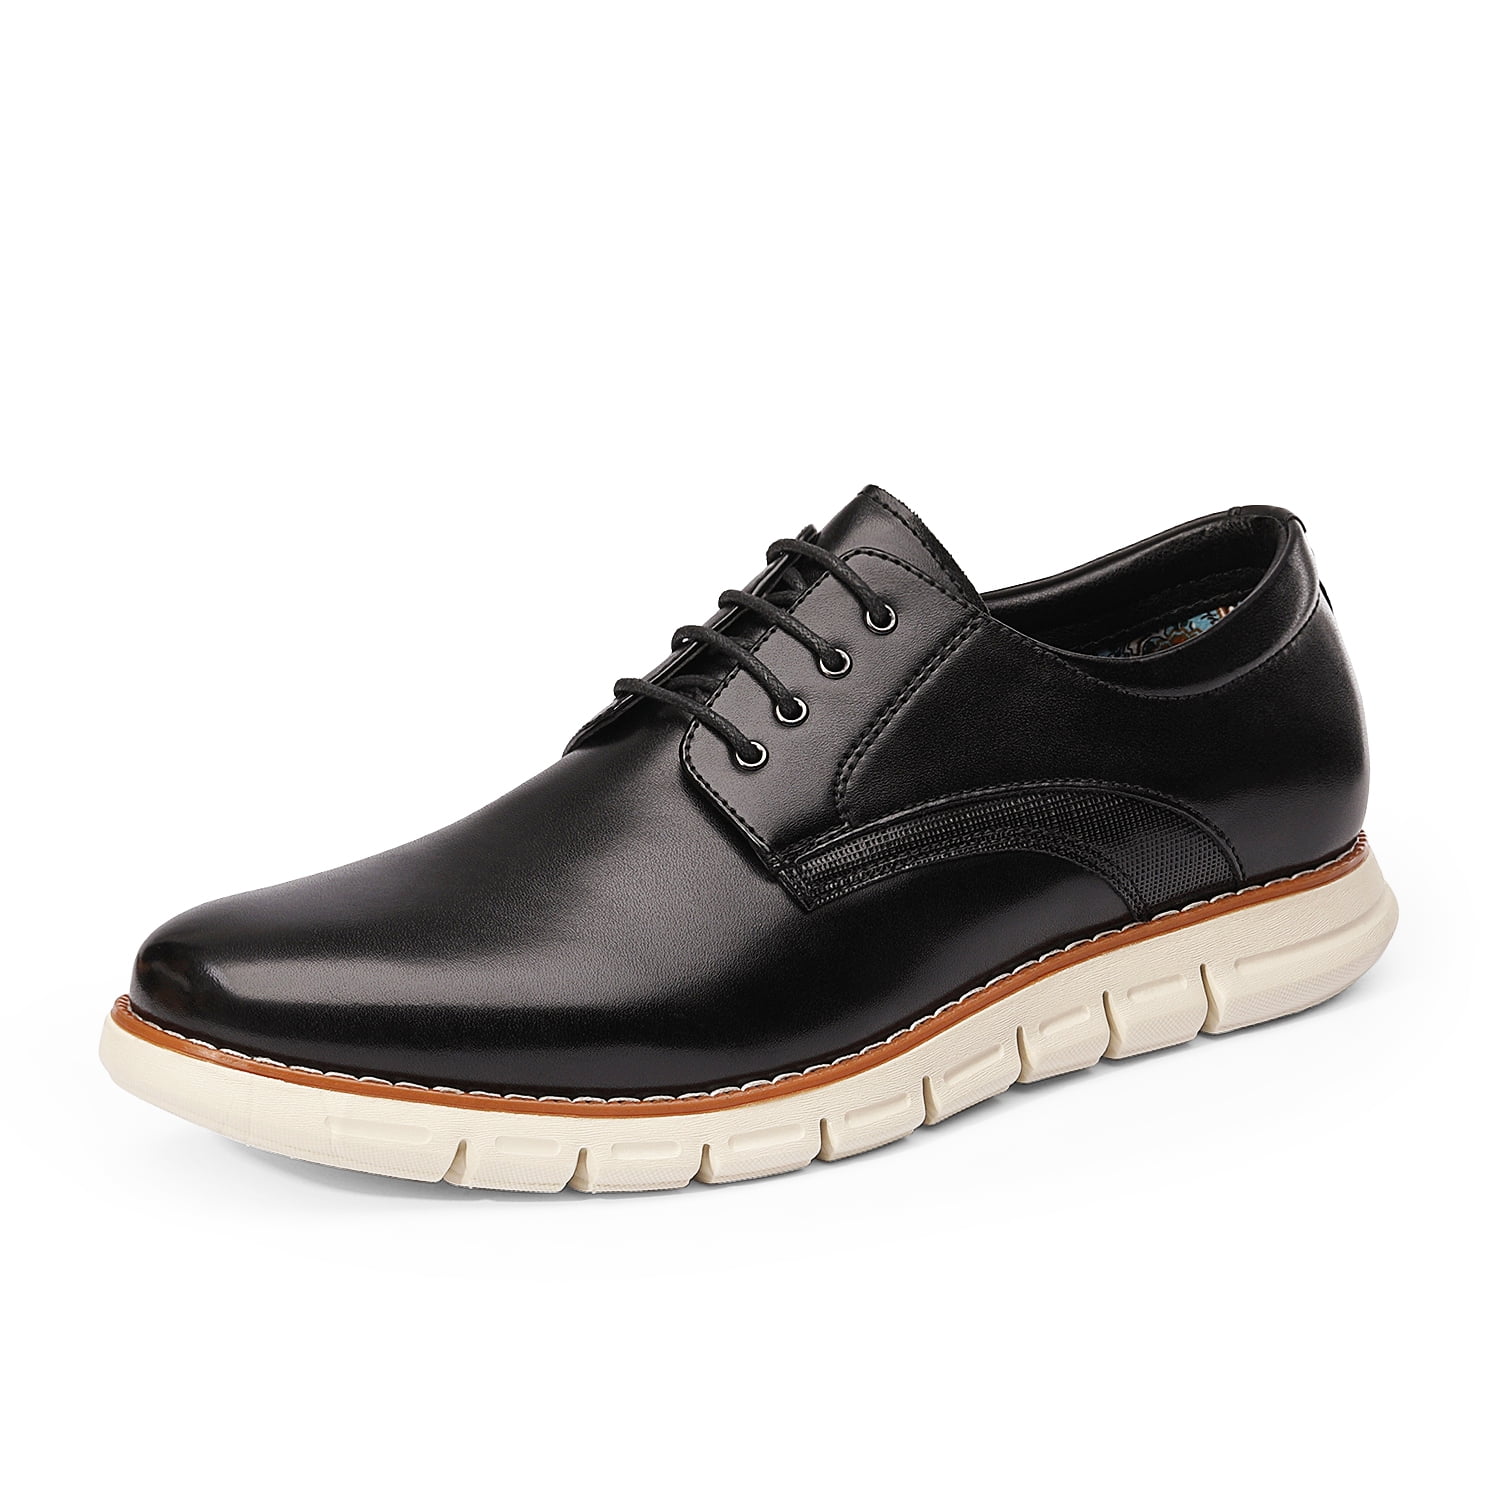 Pod Derby Mens Boys Formal Office School Slip On Black Leather Shoes Size 32-42